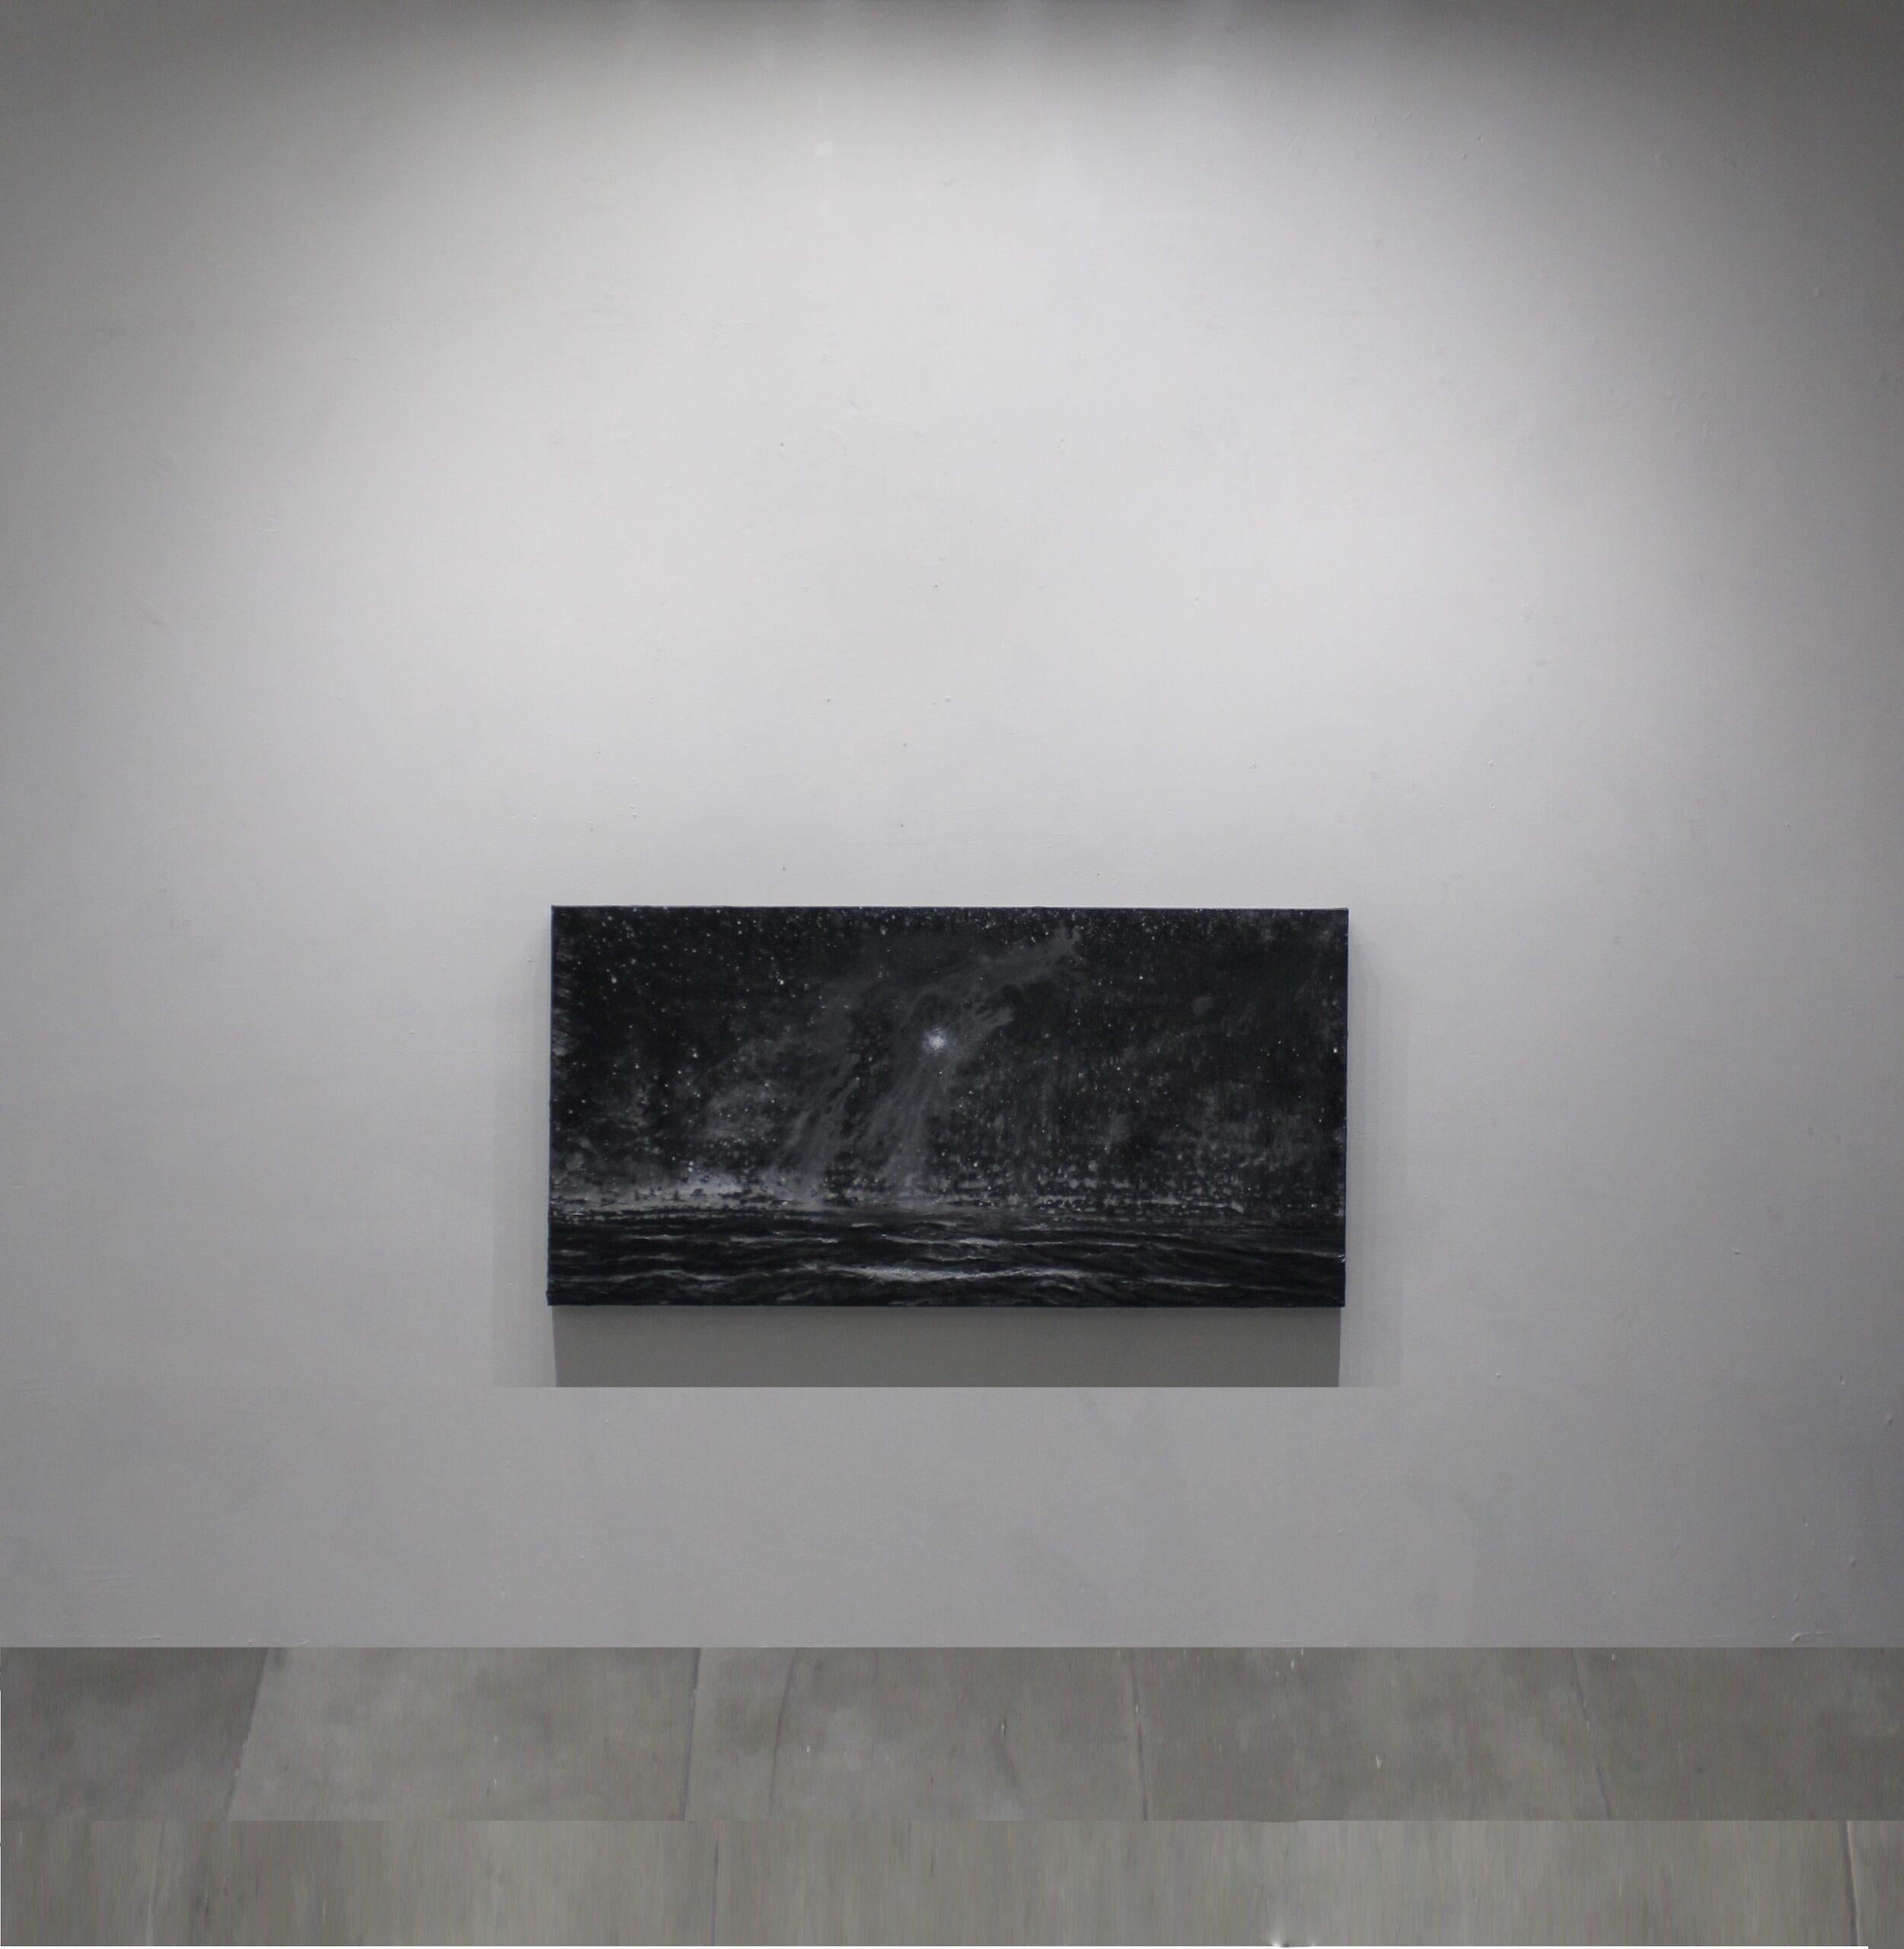 The deluge by Franco Salas Borquez - Black & white painting, ocean waves, sea For Sale 2